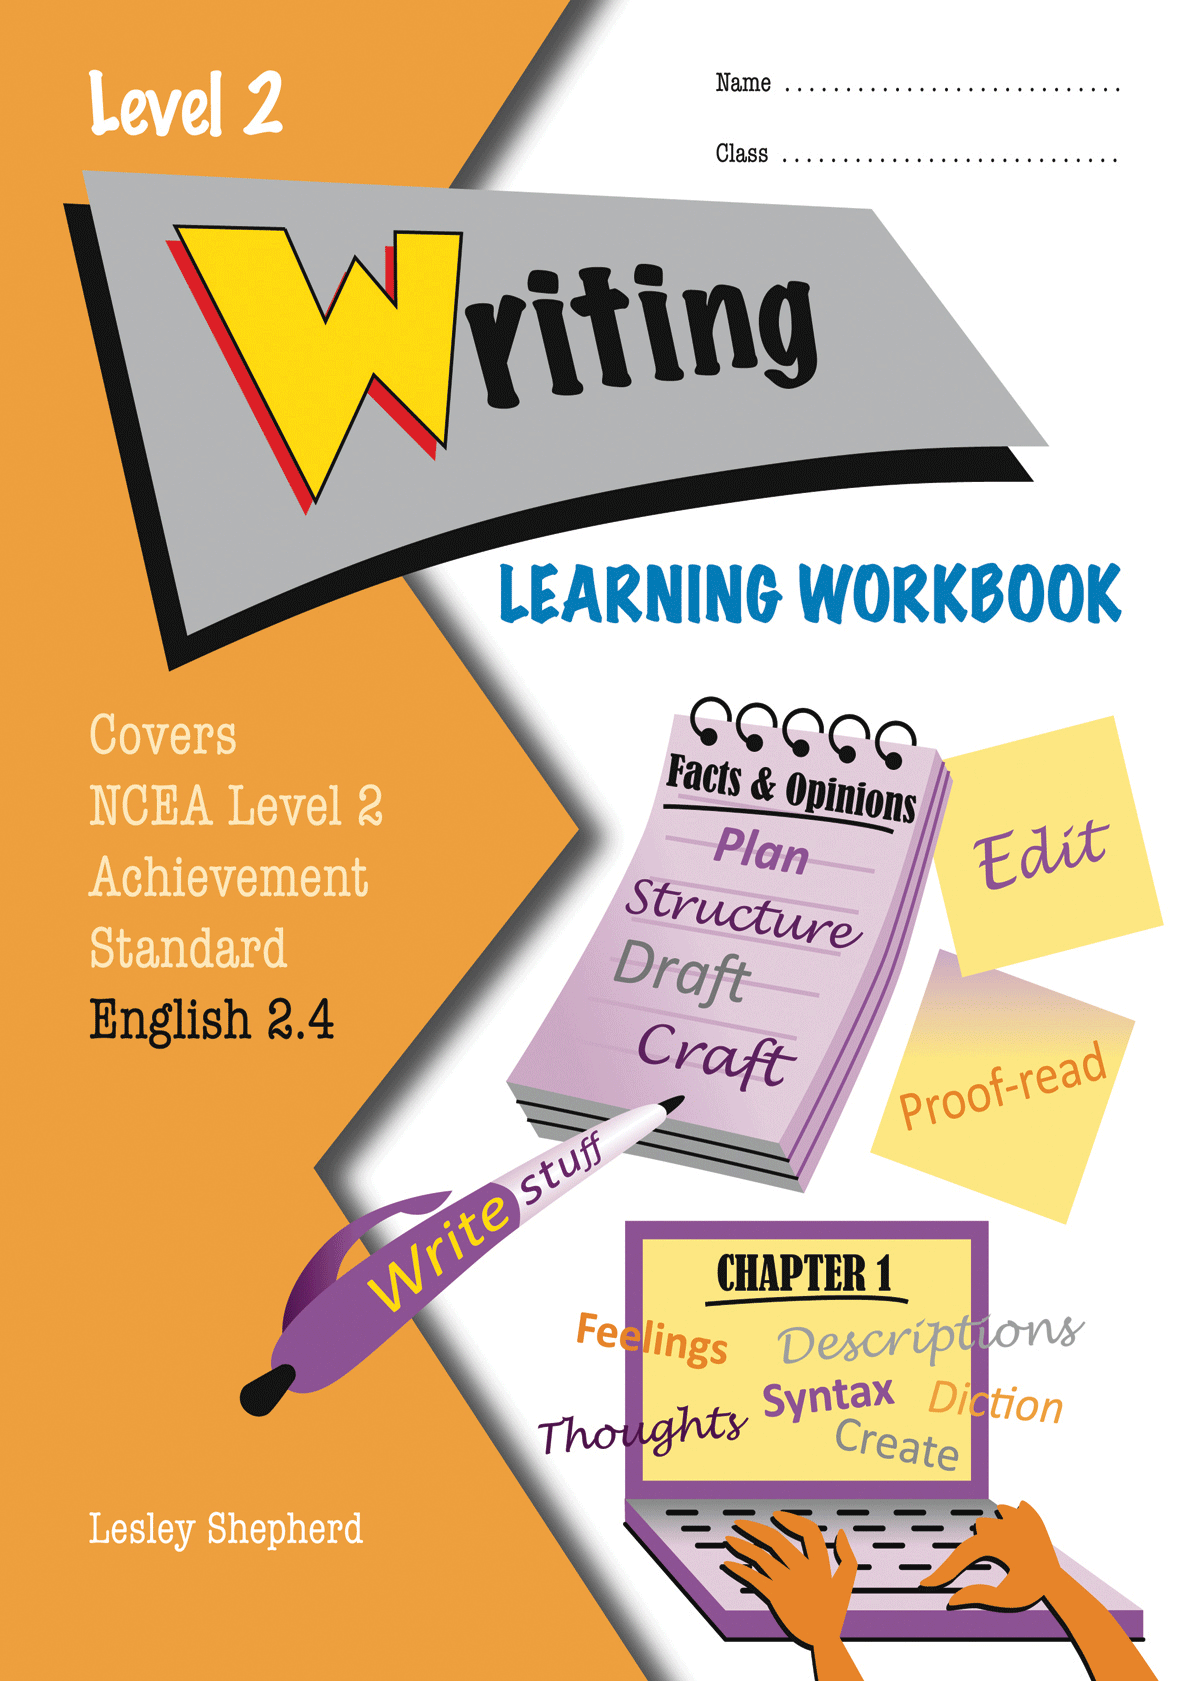 Level 2 Writing 2.4 Learning Workbook